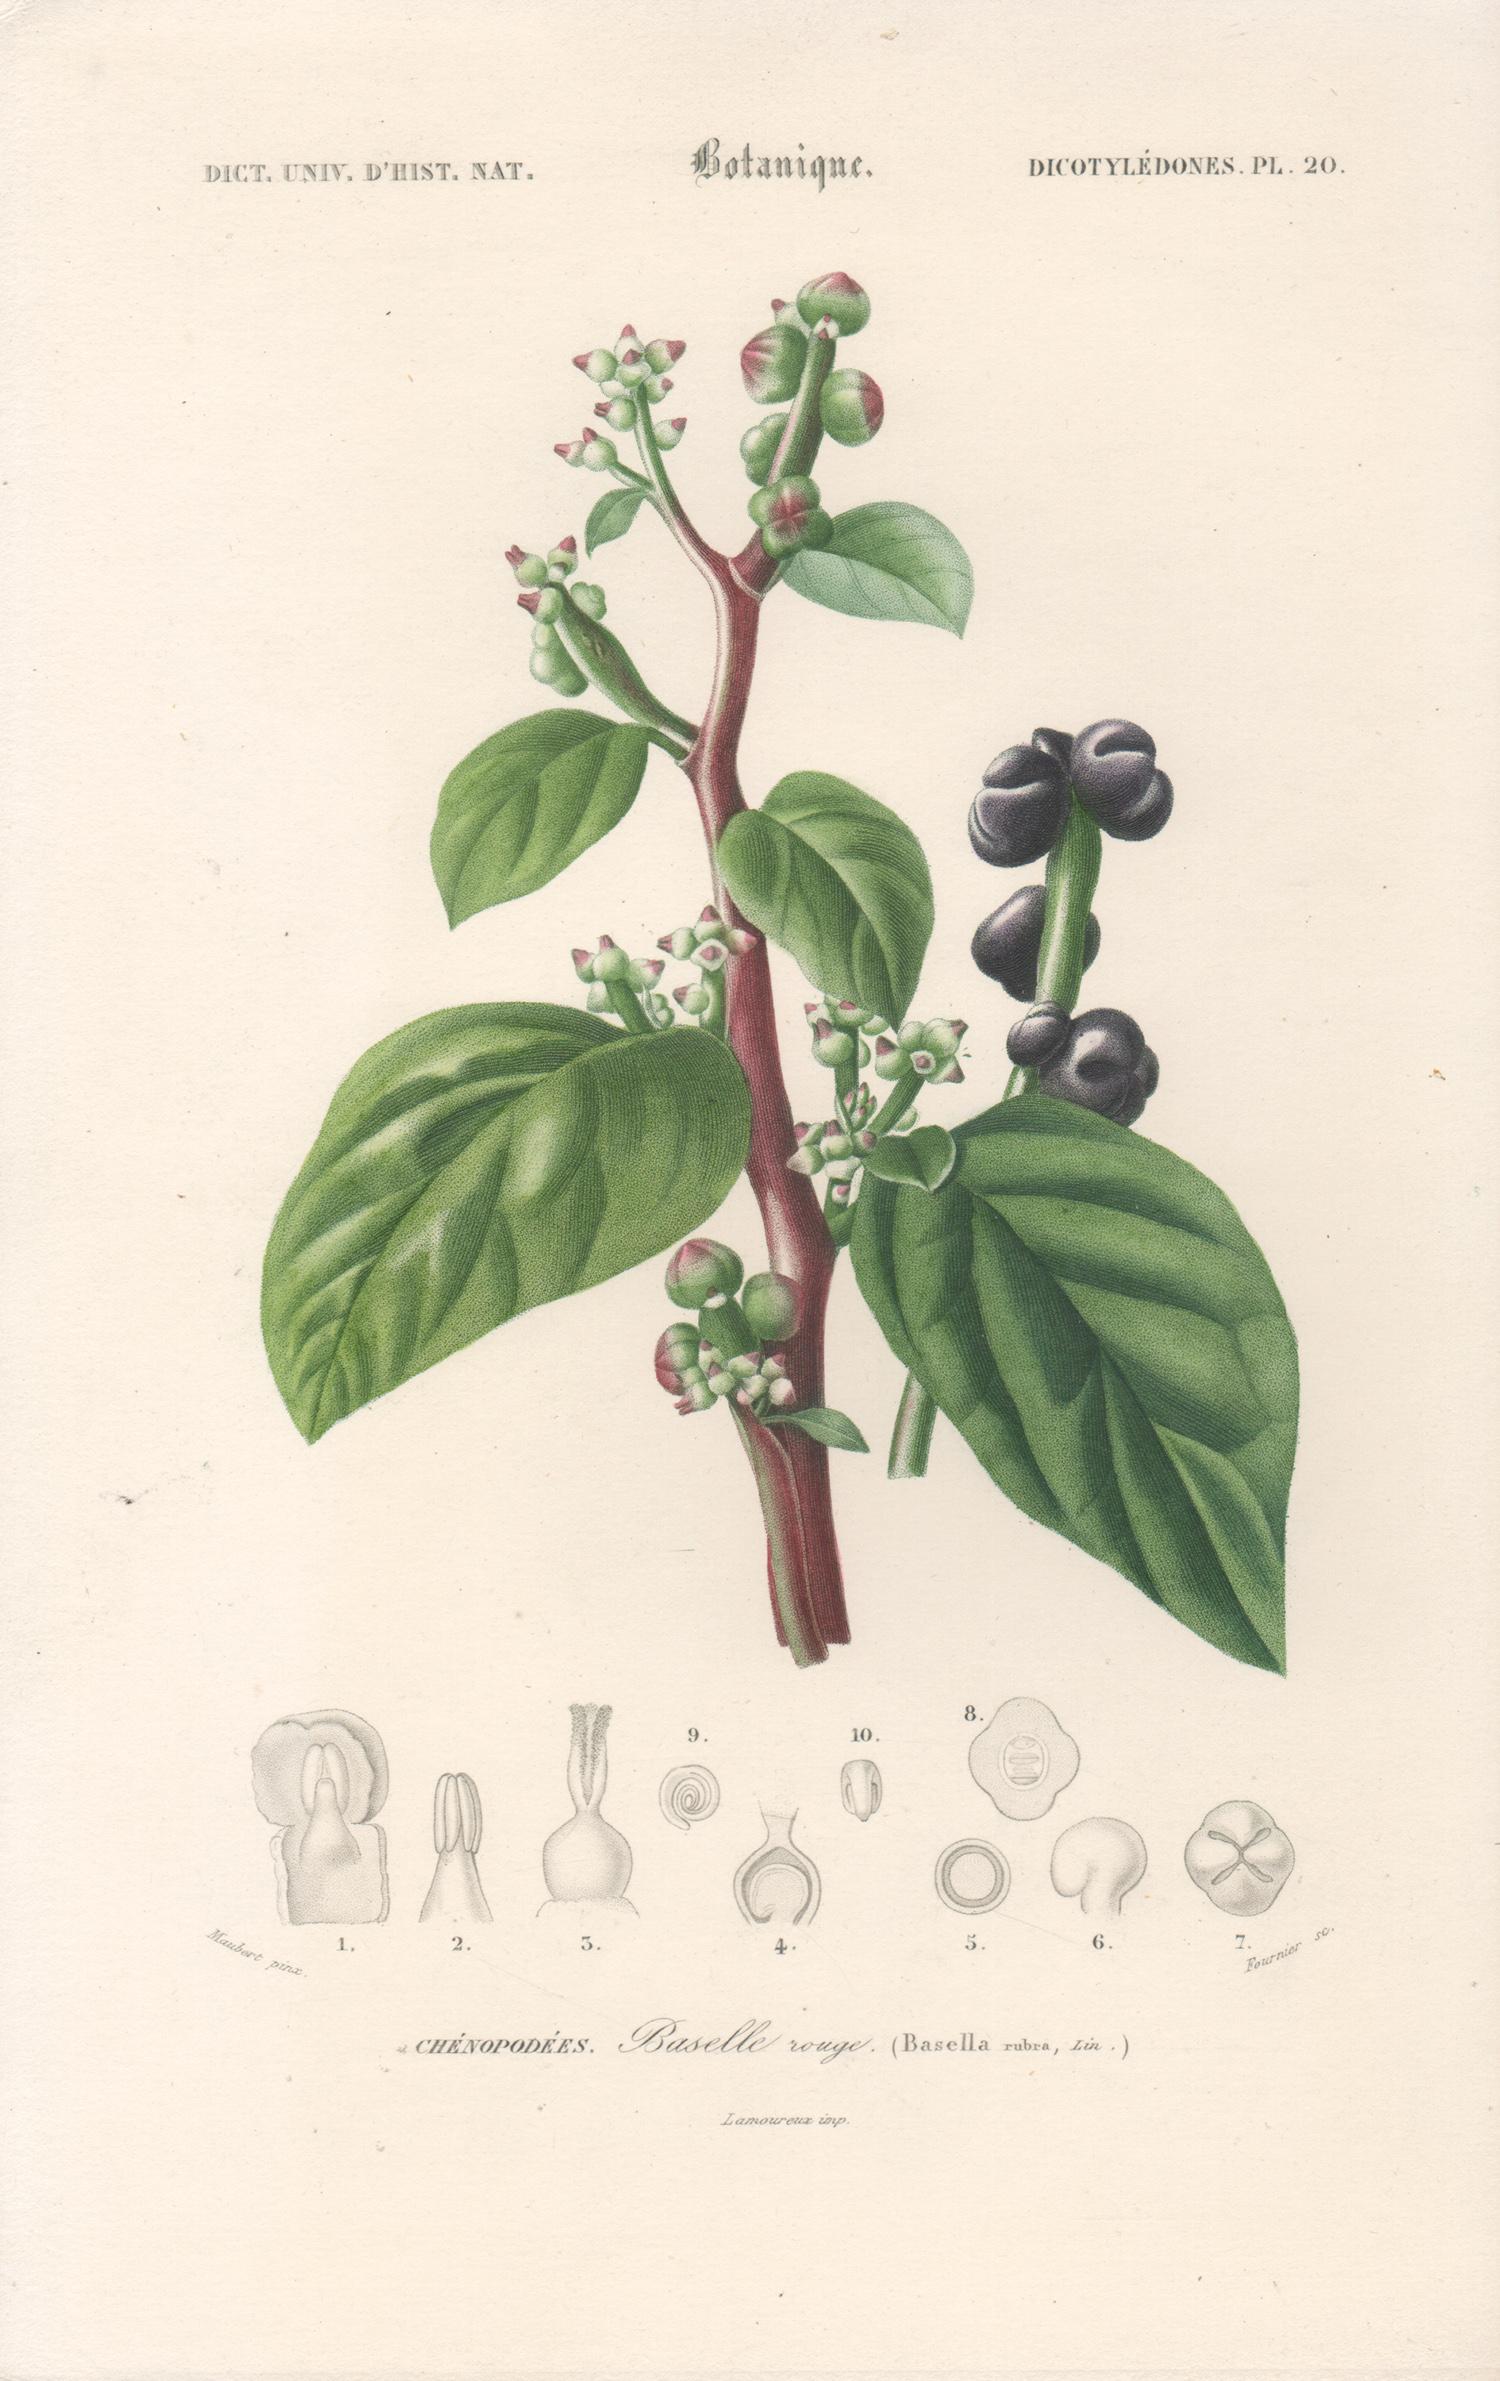 Unknown Still-Life Print - Baselle rouge (Basella rubra) (Malabar spinach) French botanical engraving, 1849